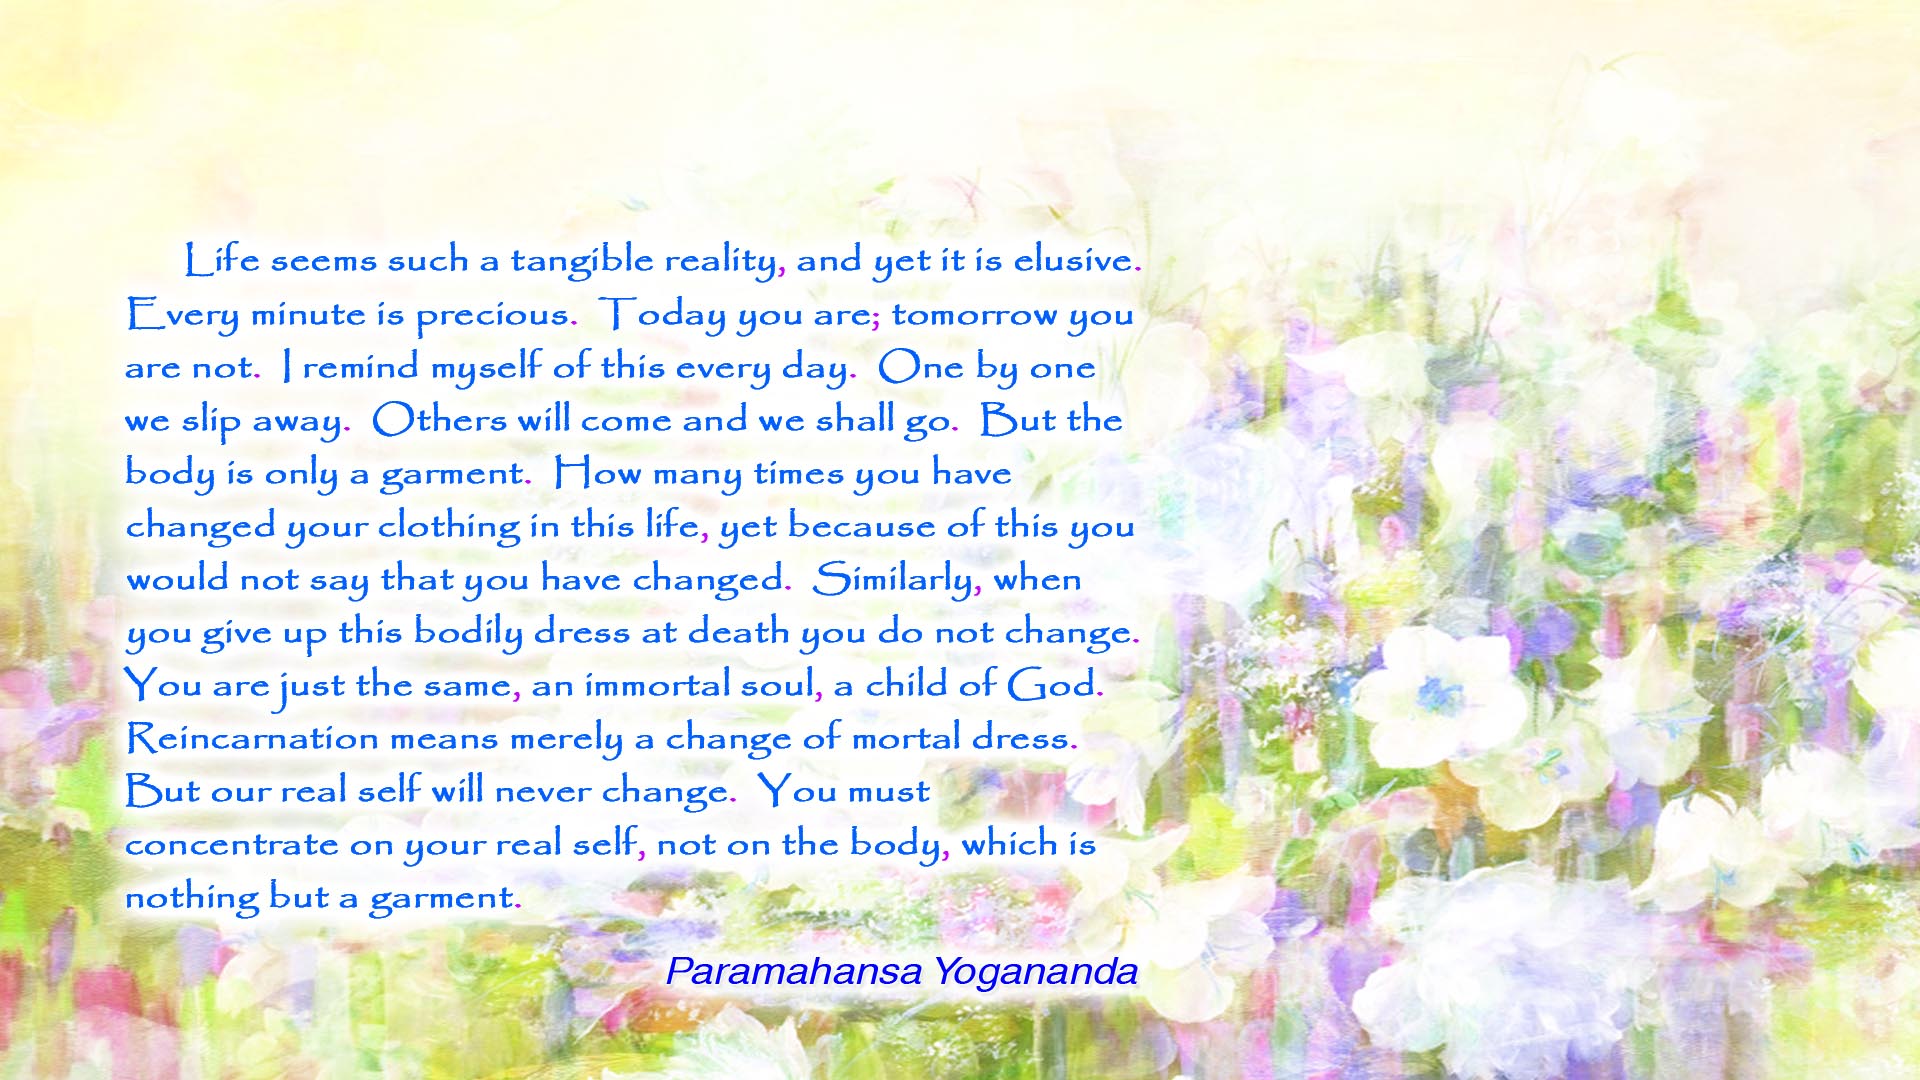 Yogananda body is a garment wallpaper